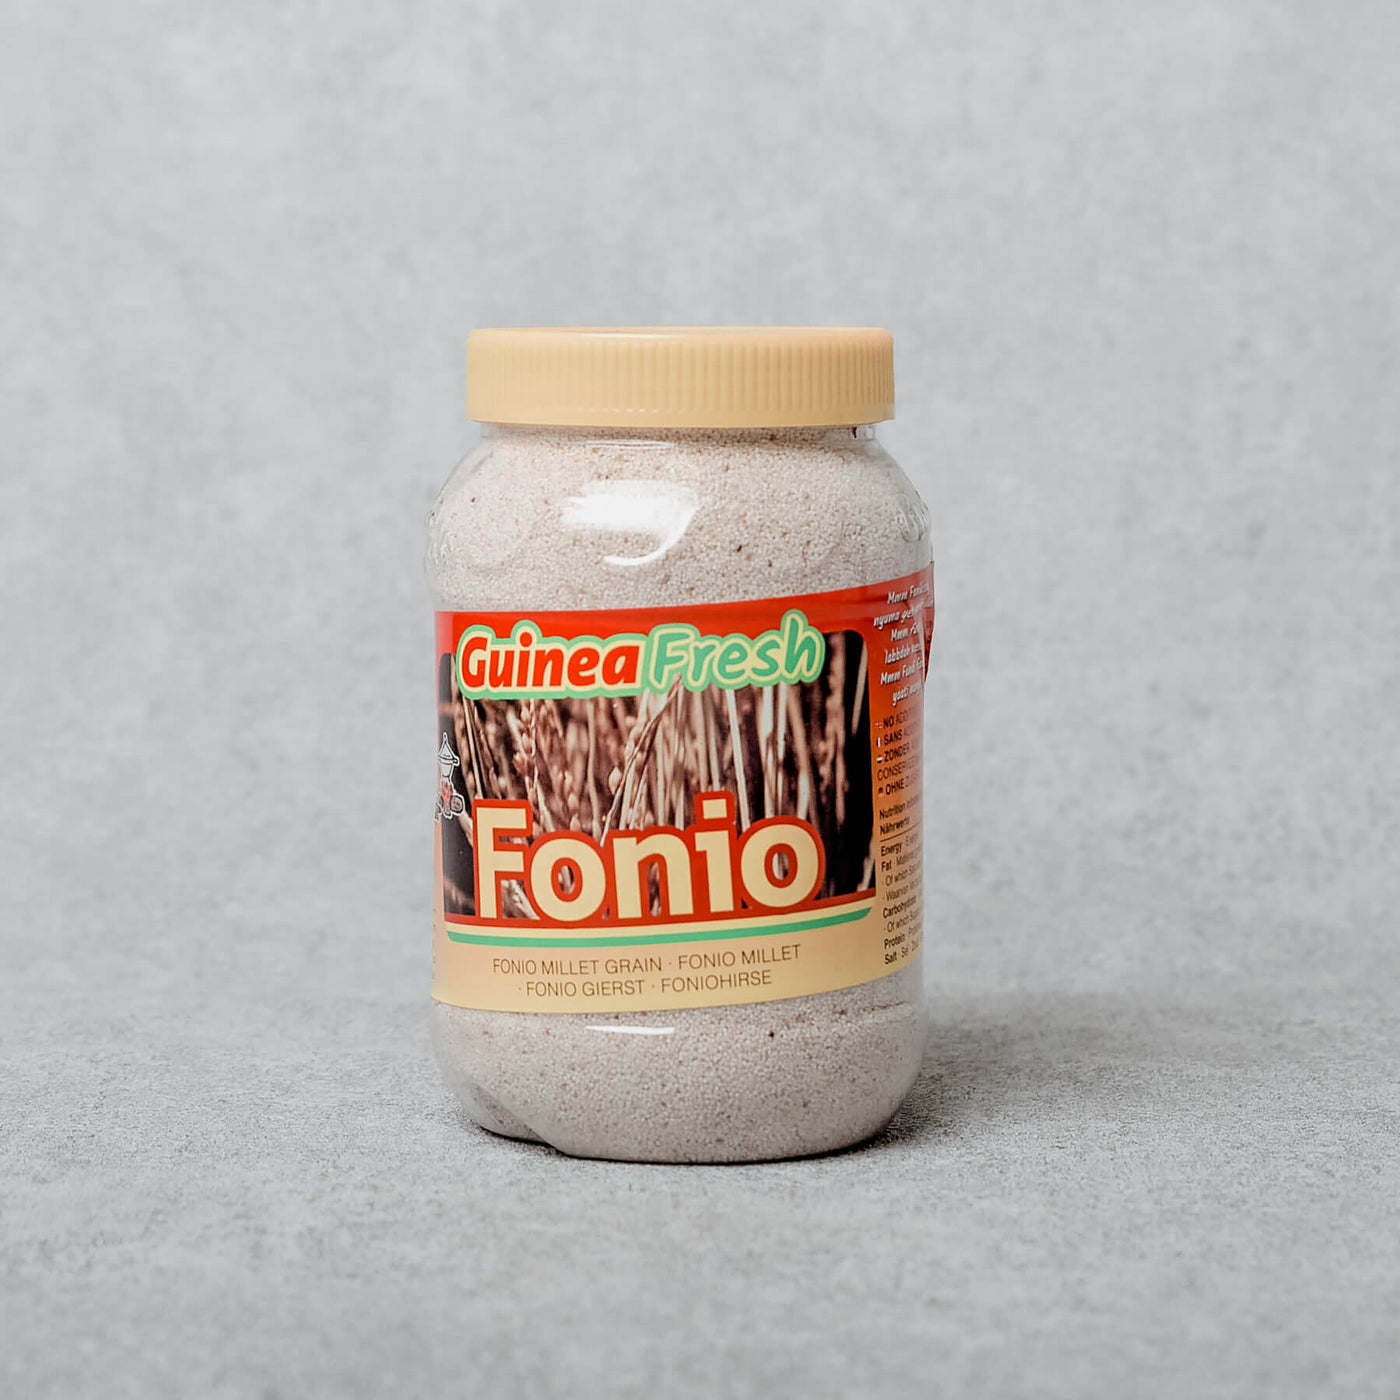 Guinea Fresh - Fonio